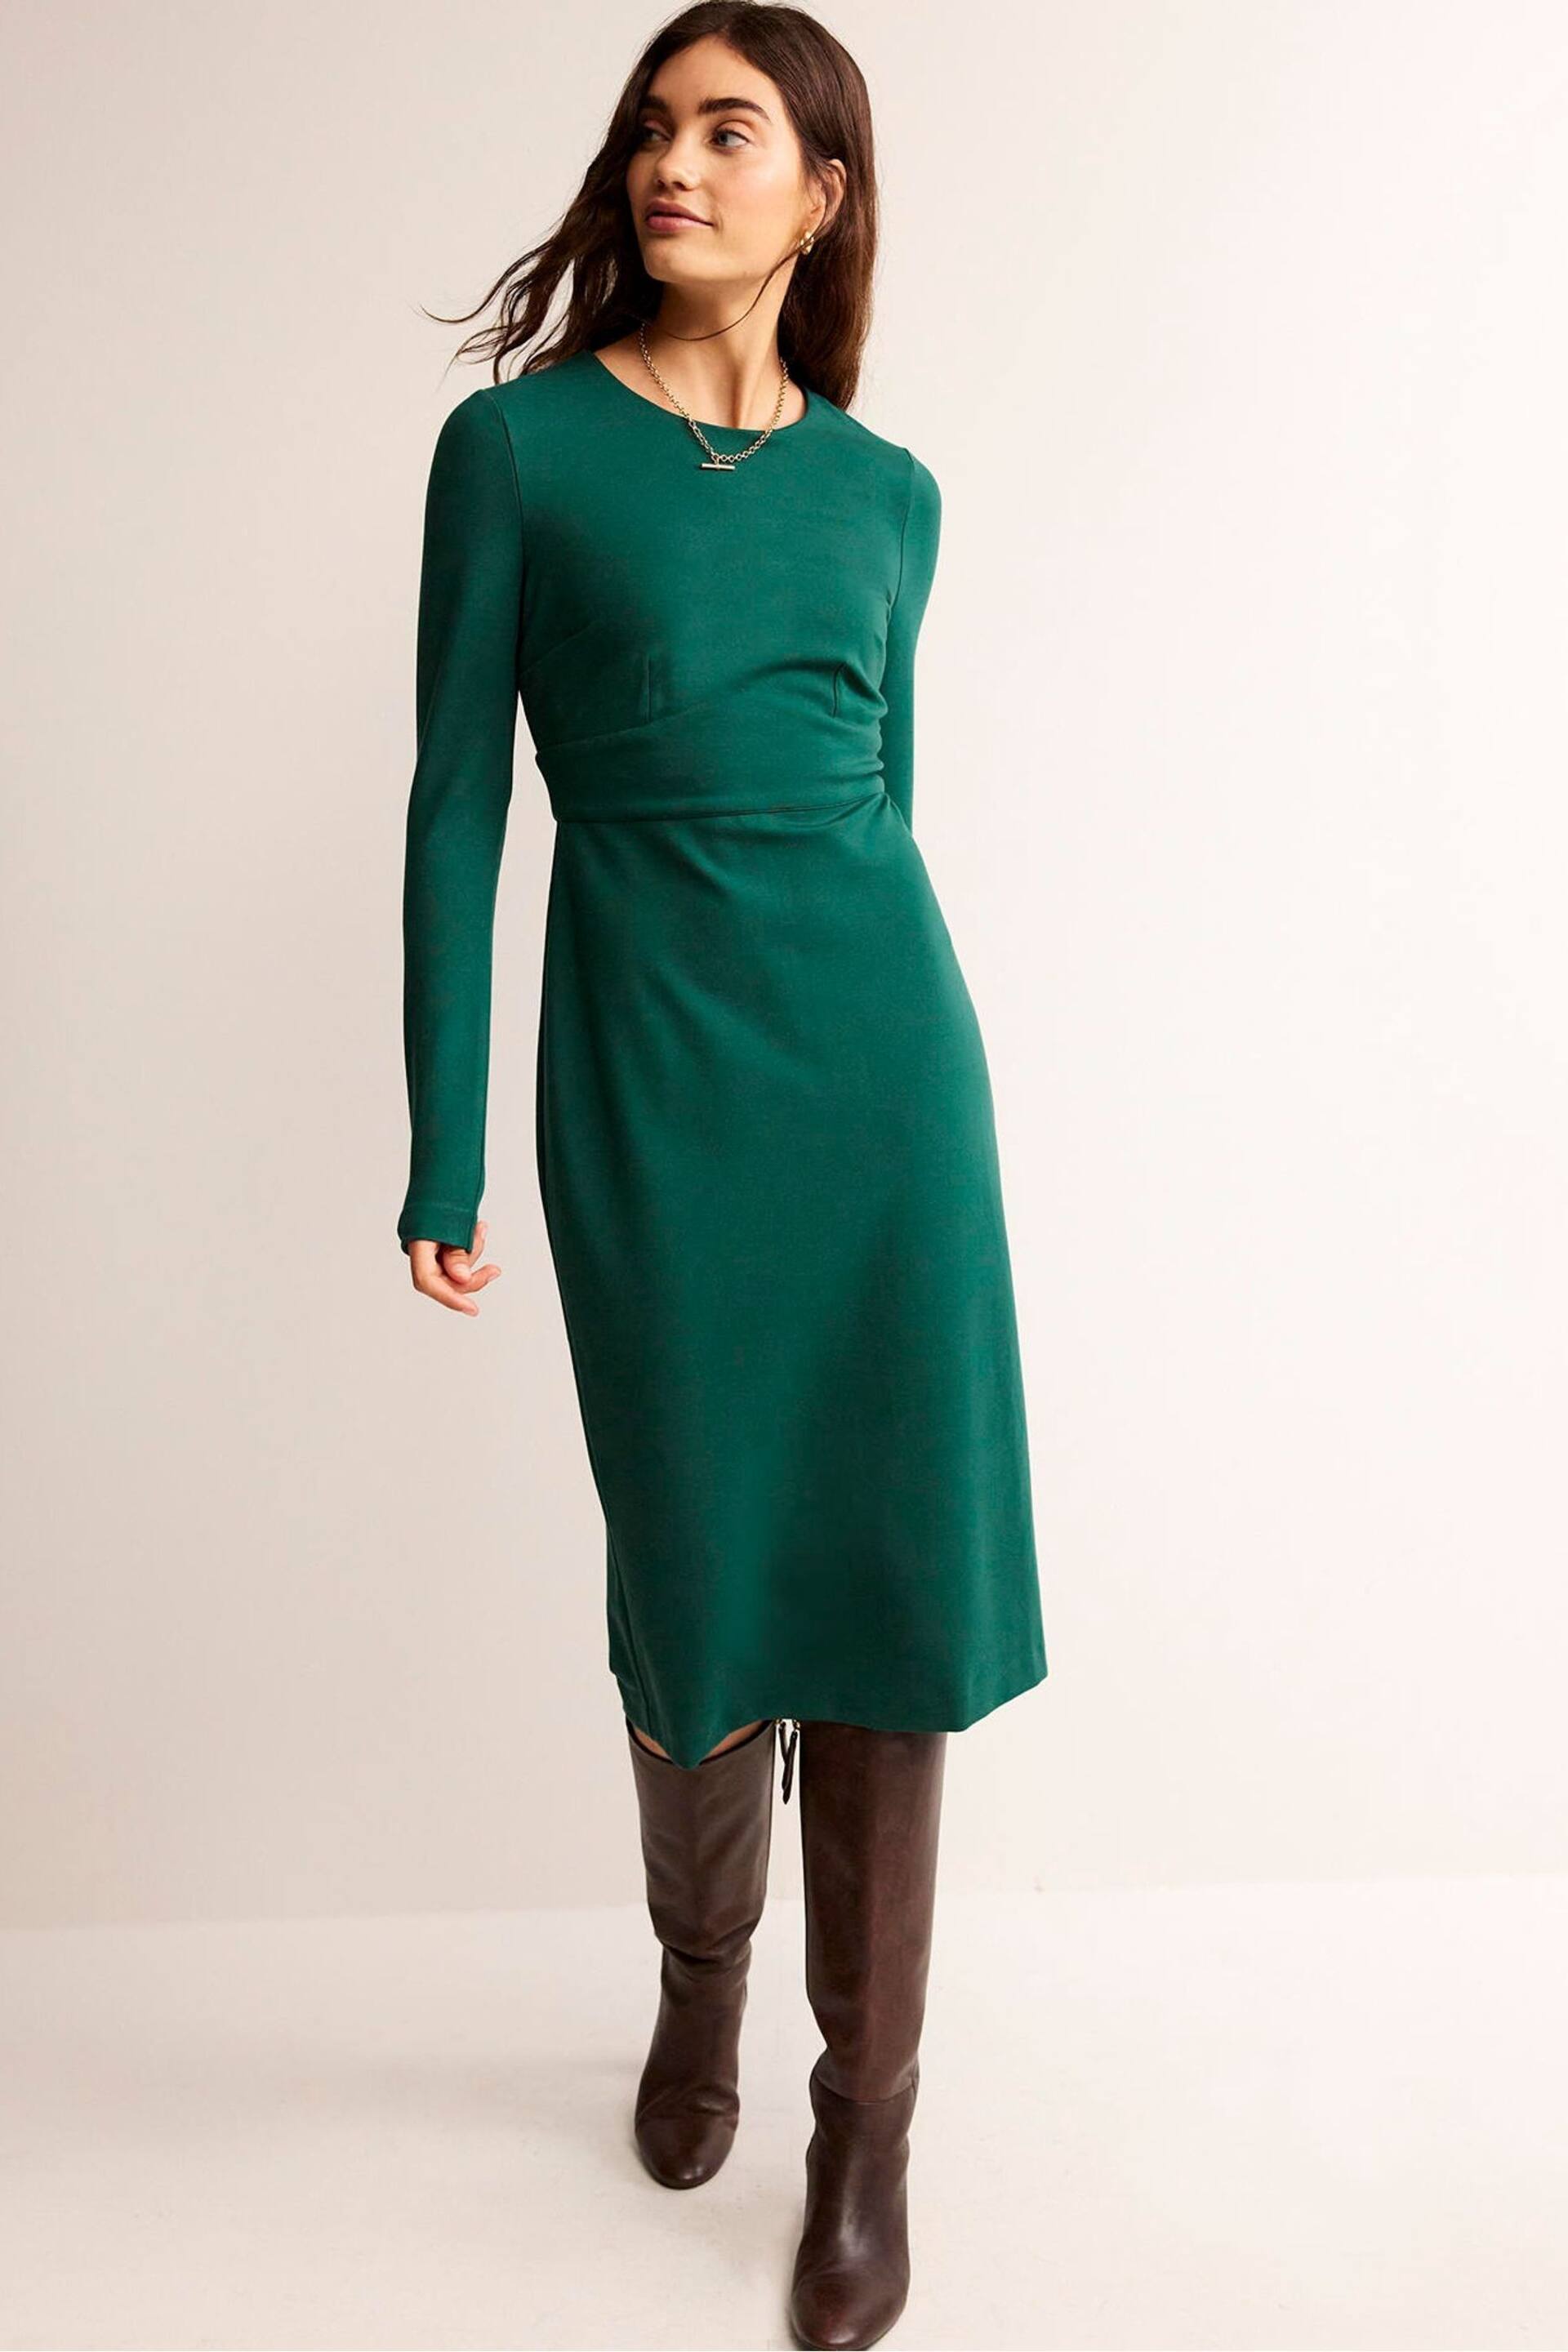 Boden Green Nadia Jersey Midi Dress - Image 4 of 6